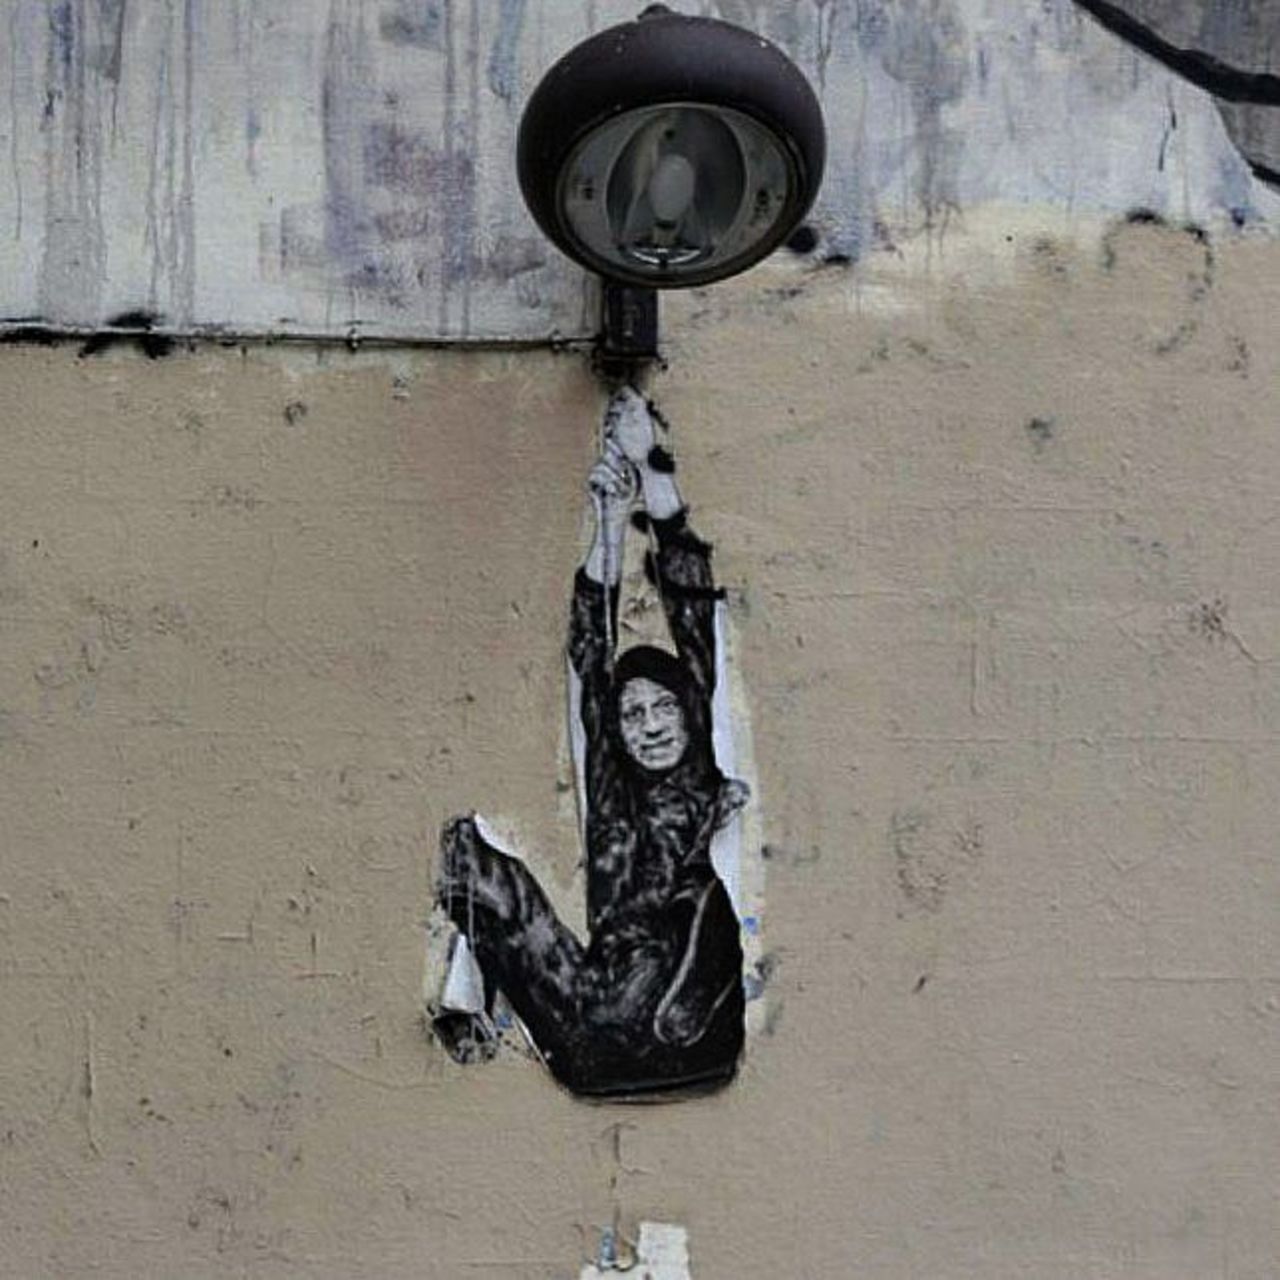 circumjacent_fr: #Paris #graffiti photo by jpoesse http://ift.tt/1Lu4sP2 #StreetArt https://t.co/8kIFXXXlPh